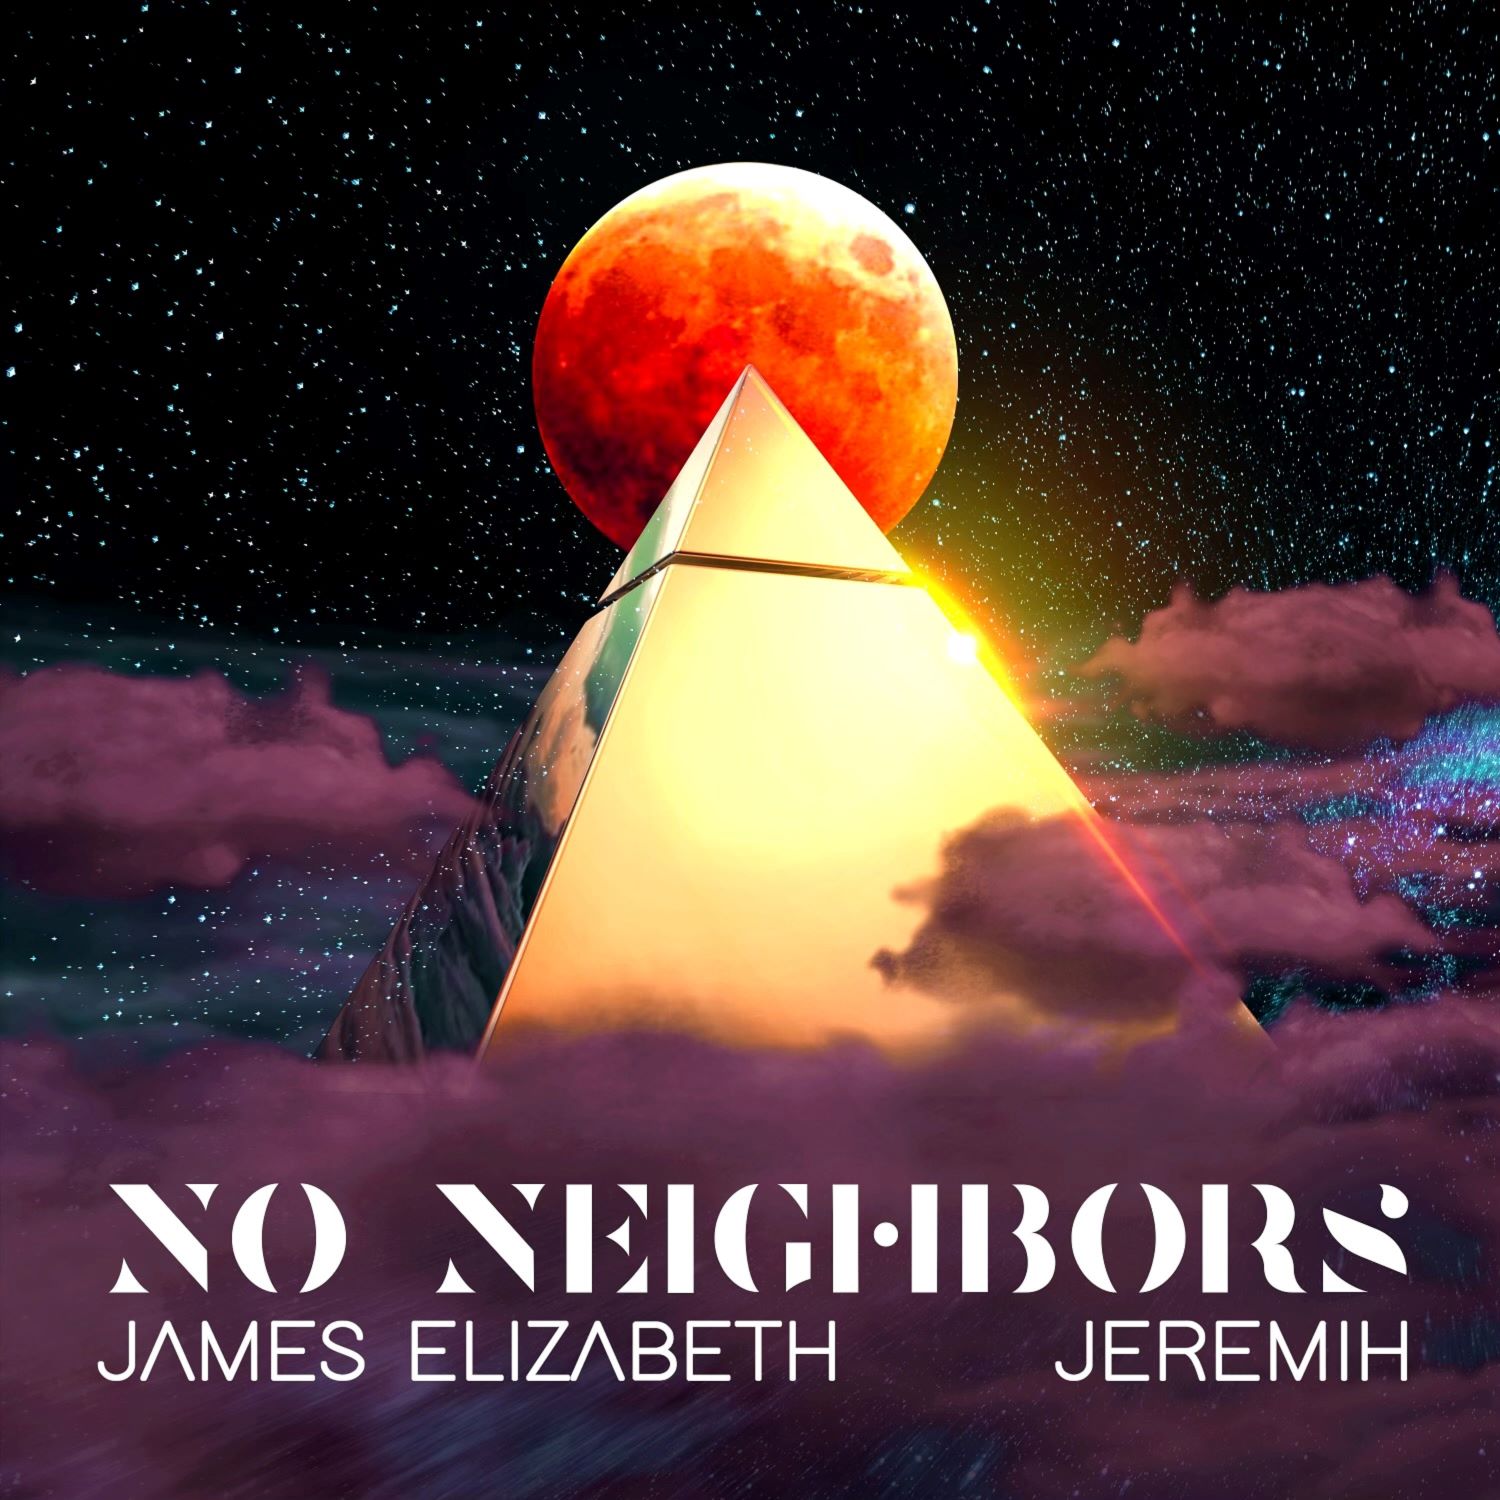 James Elizabeth - "No Neighbors" feat. Jeremih Album Cover